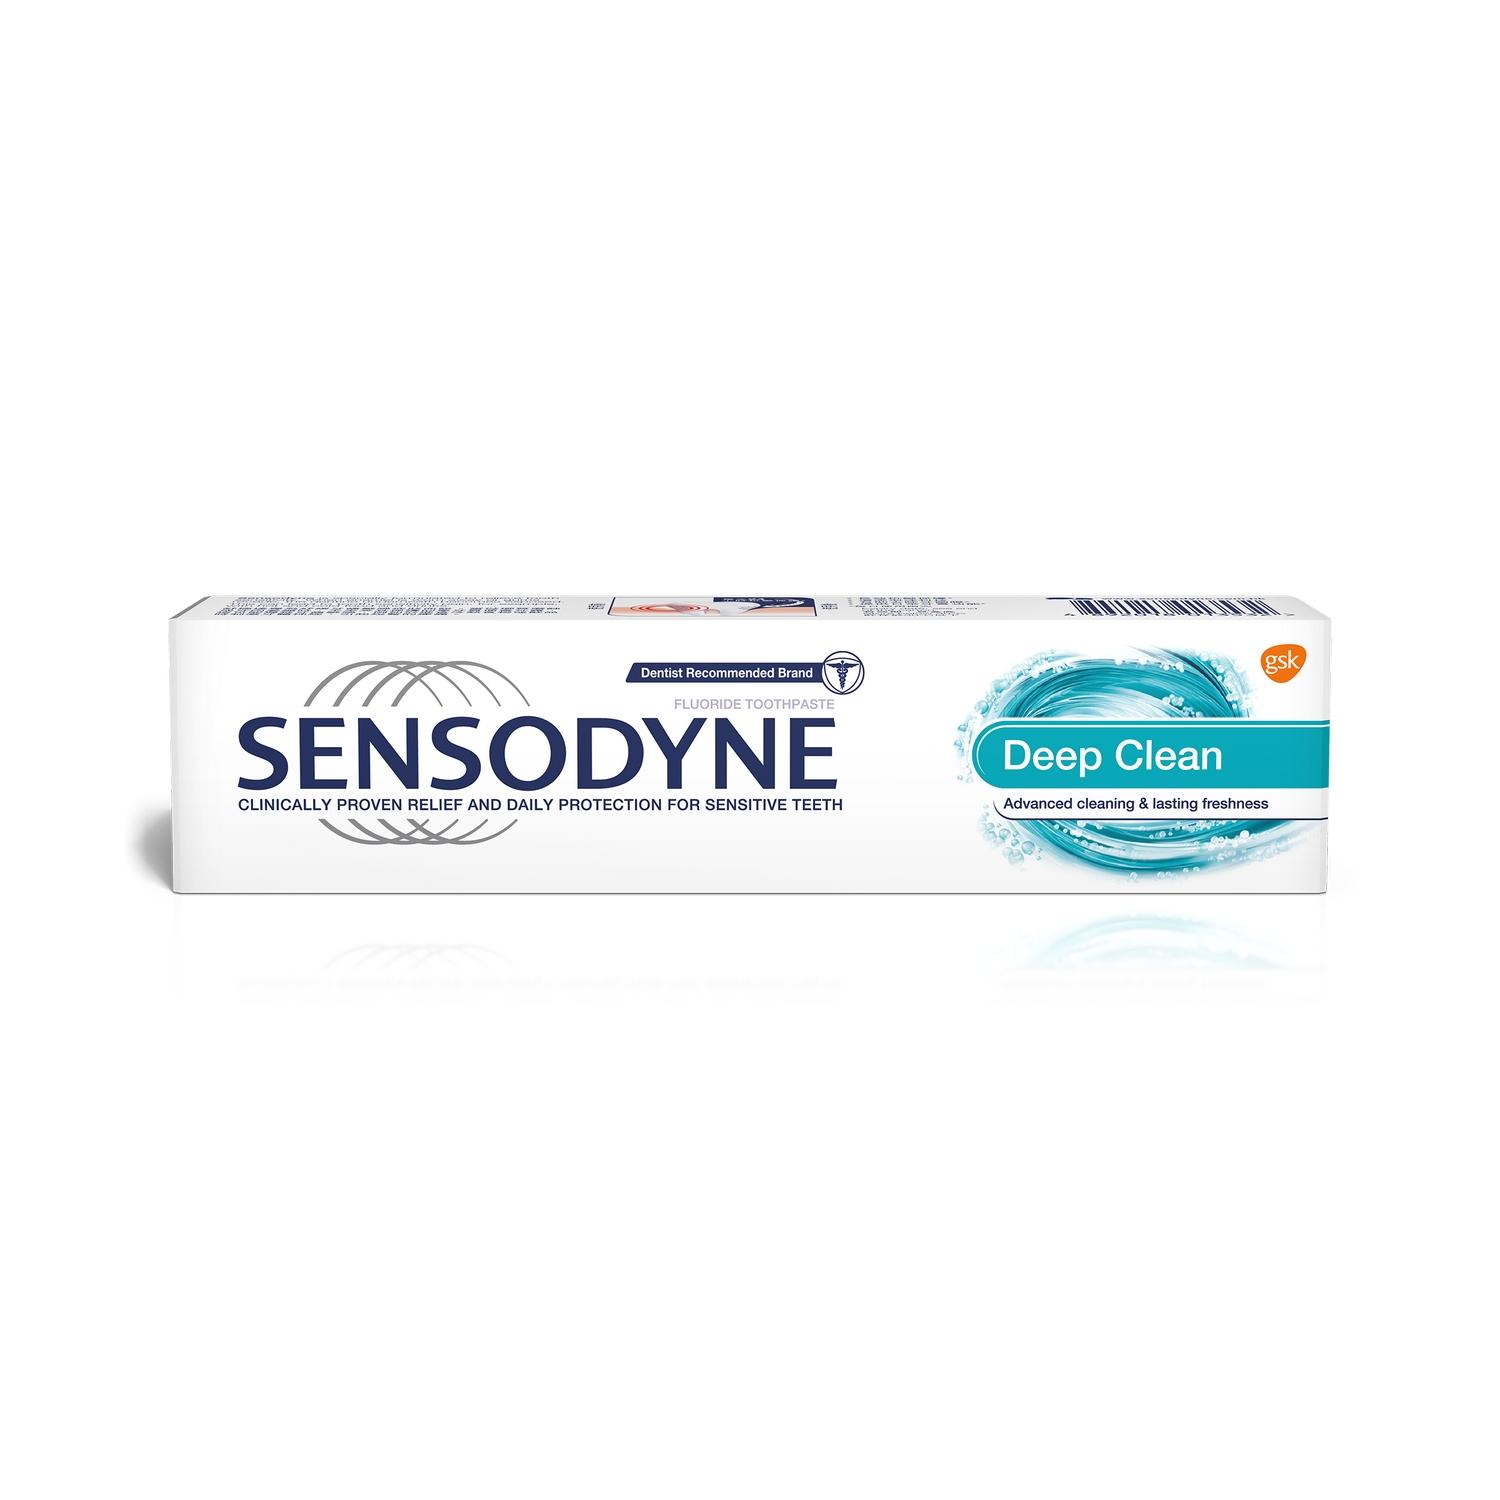 Sensodyne เซ็นโซดายน์ ยาสีฟัน สูตรดีพคลีน 100 กรัม (Oral,Oral Care,Toothpaste,ยาสีฟัน,ดูแลฟัน,ช่องปาก,สุขภาพฟัน) ของแท้